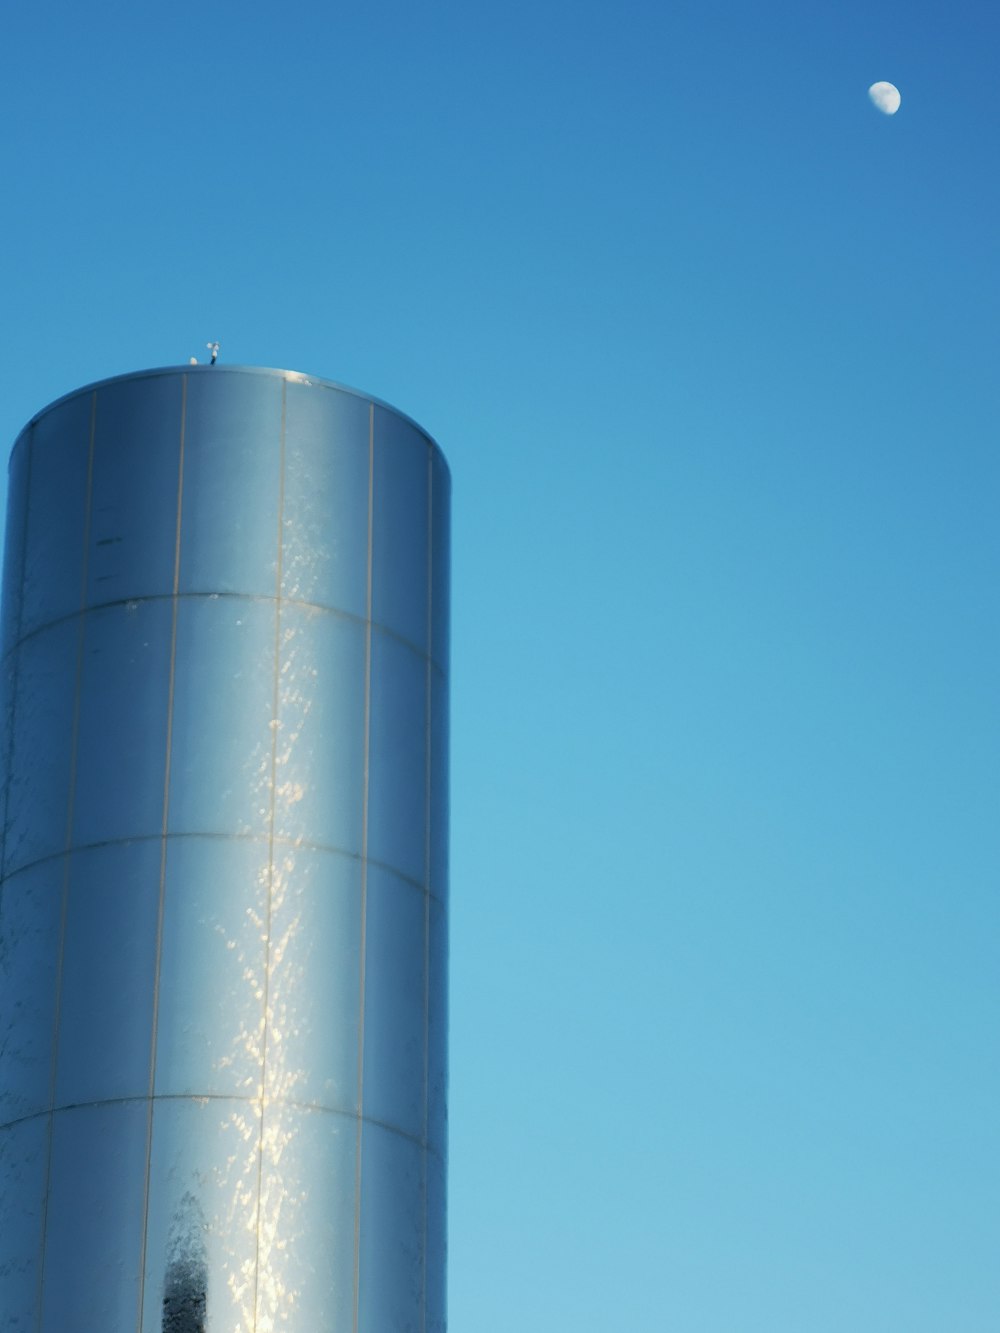 gray metal tank under blue sky during daytime